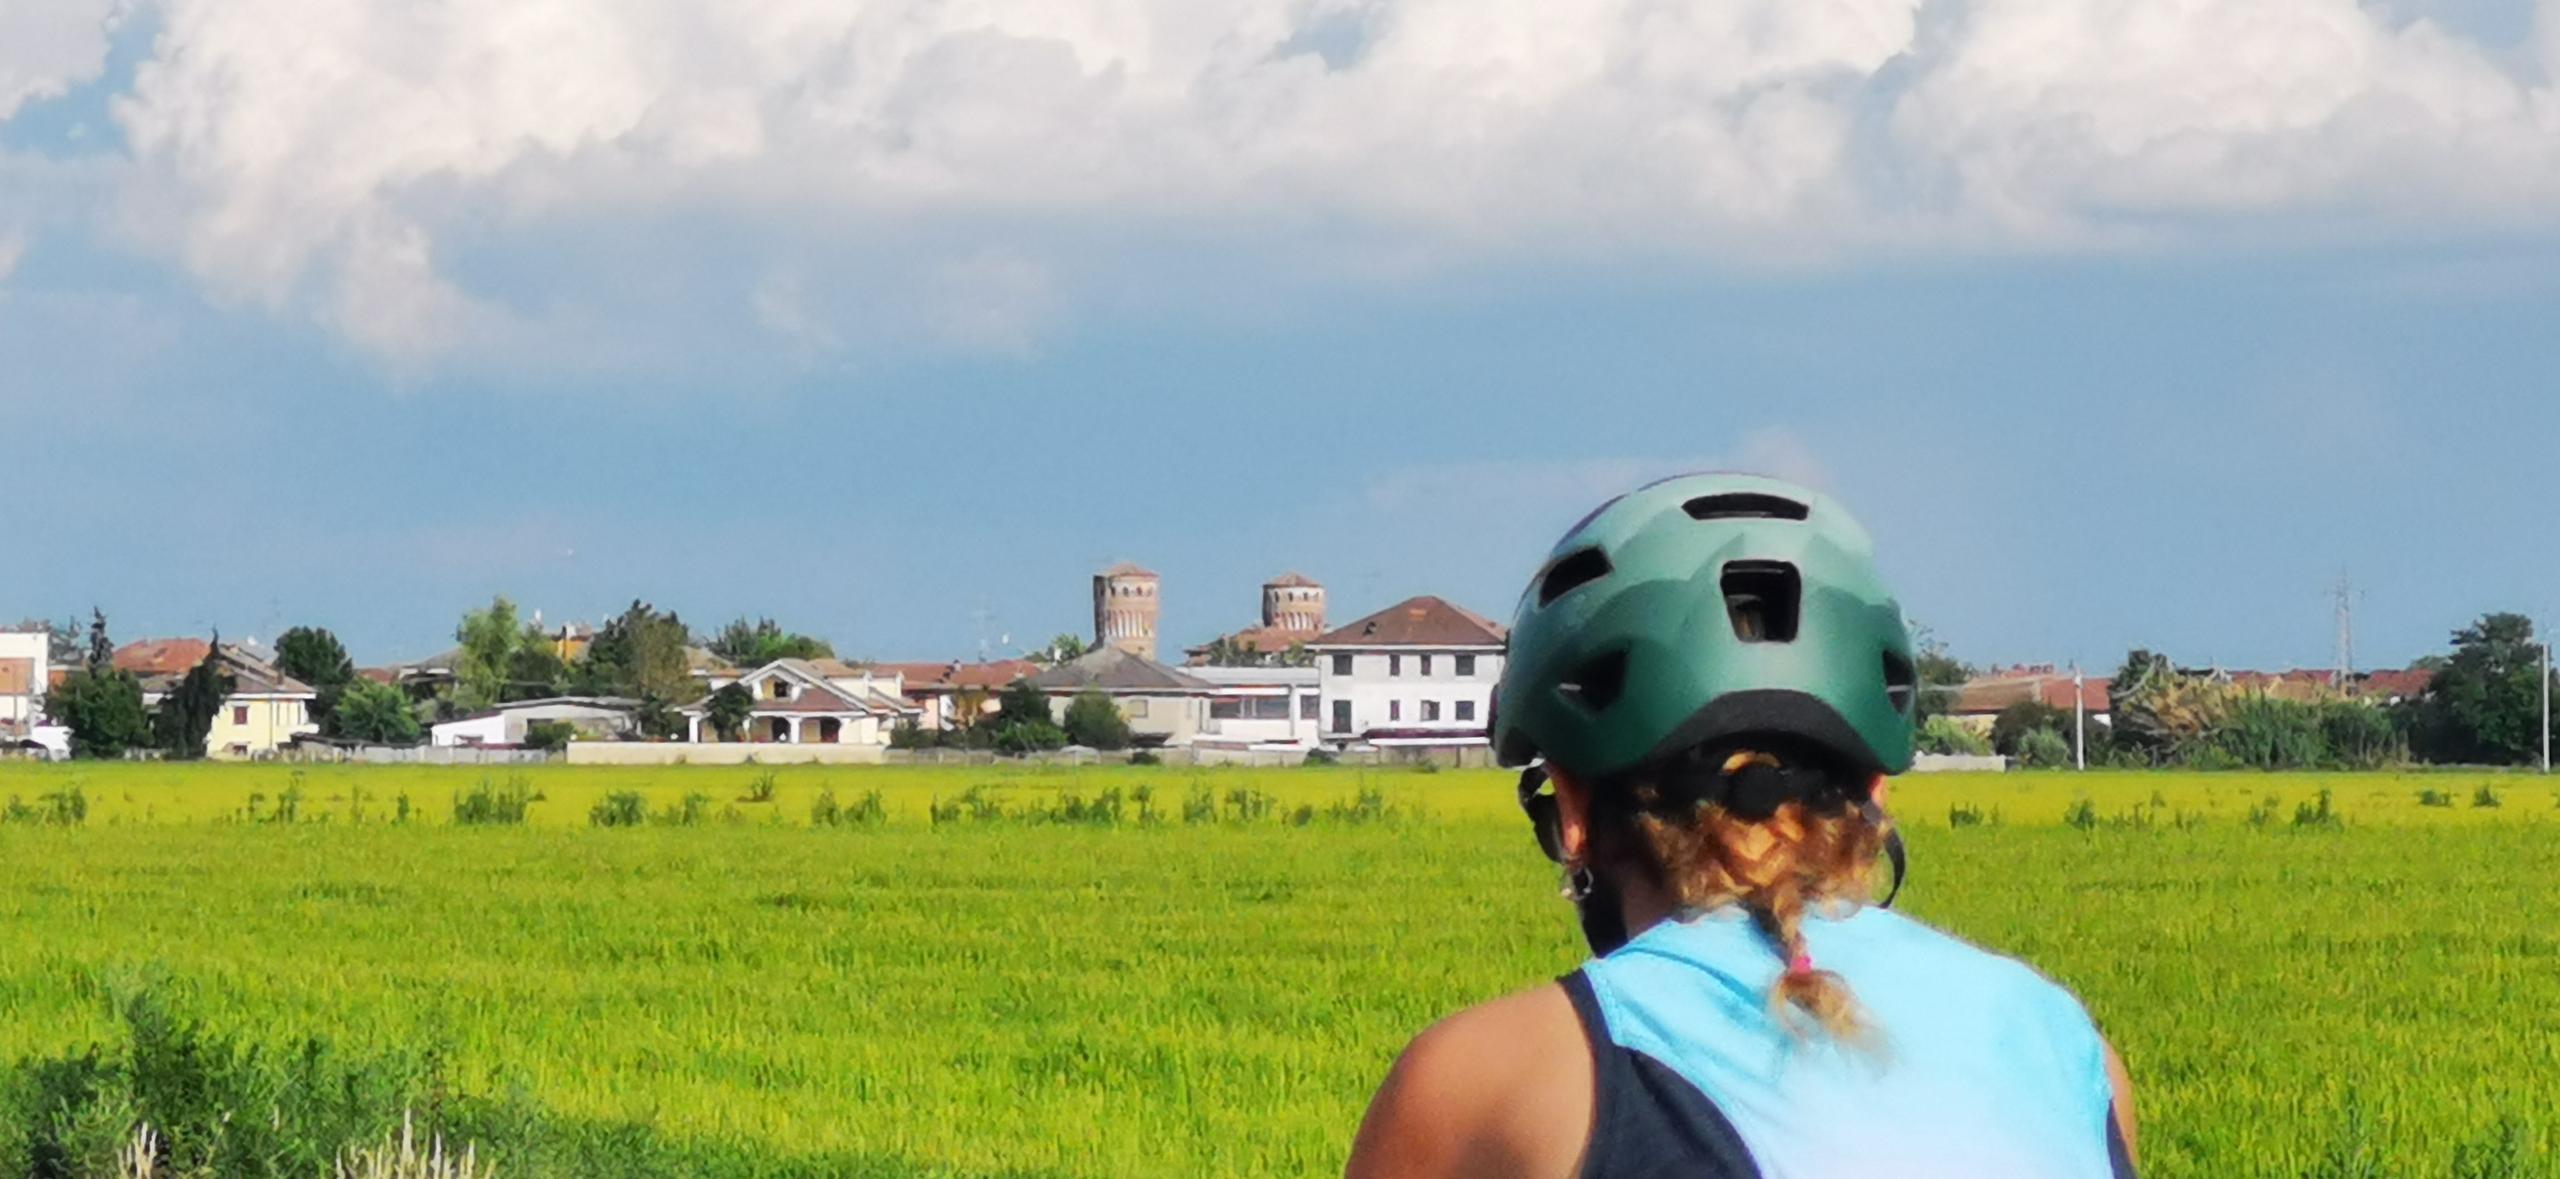 Trekking in Piemonte, Gravel in Piemonte, Hiking, Mountain Bike, E-bike, Vercellese, Valsesia, Biellese, Monferrato